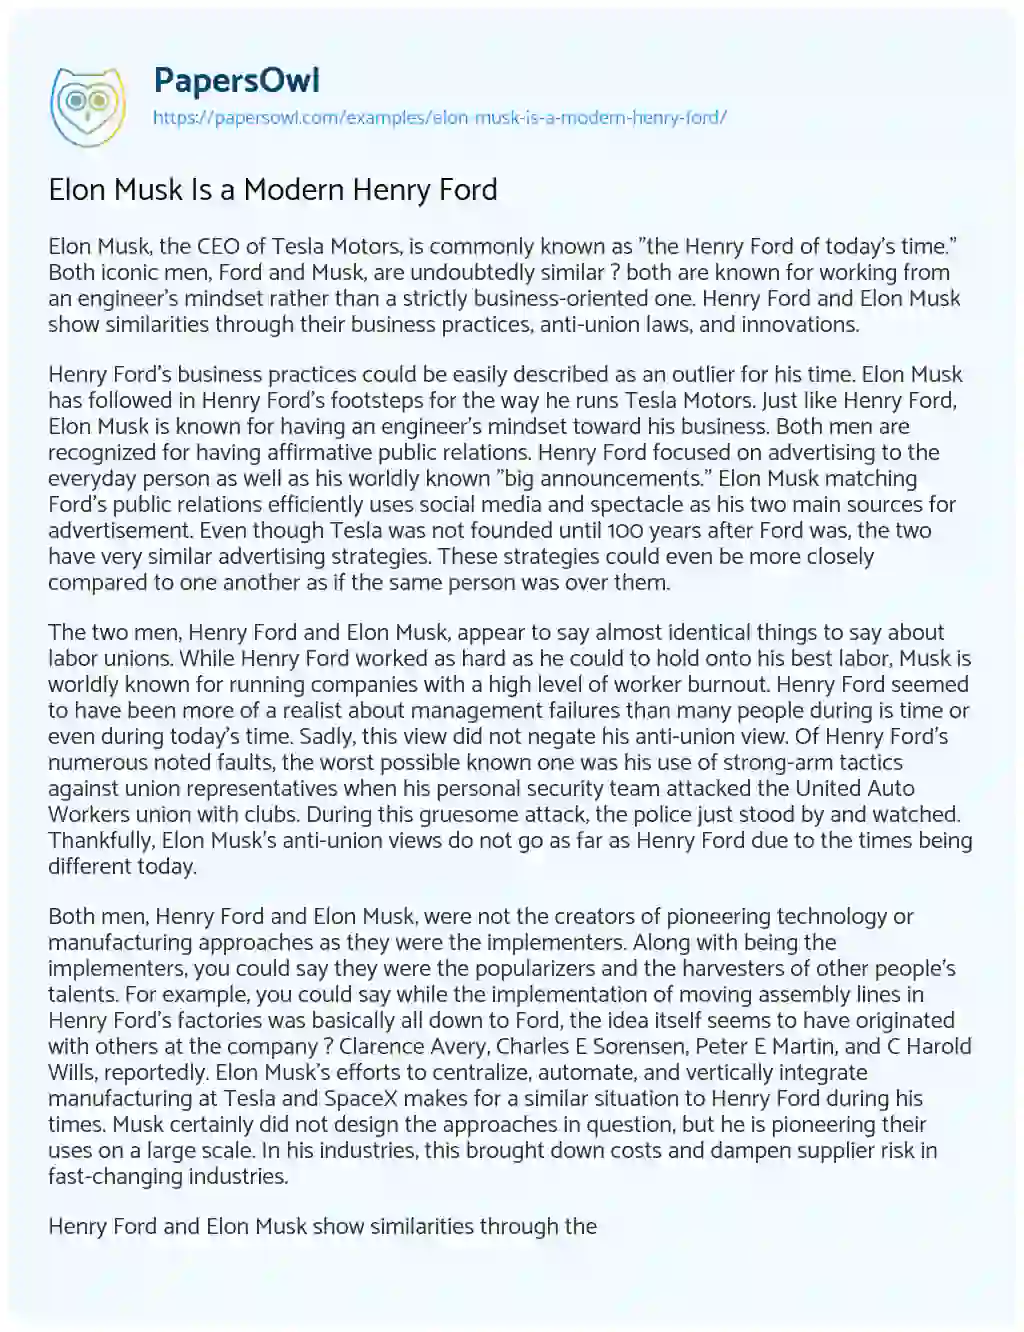 Elon Musk is a Modern Henry Ford essay